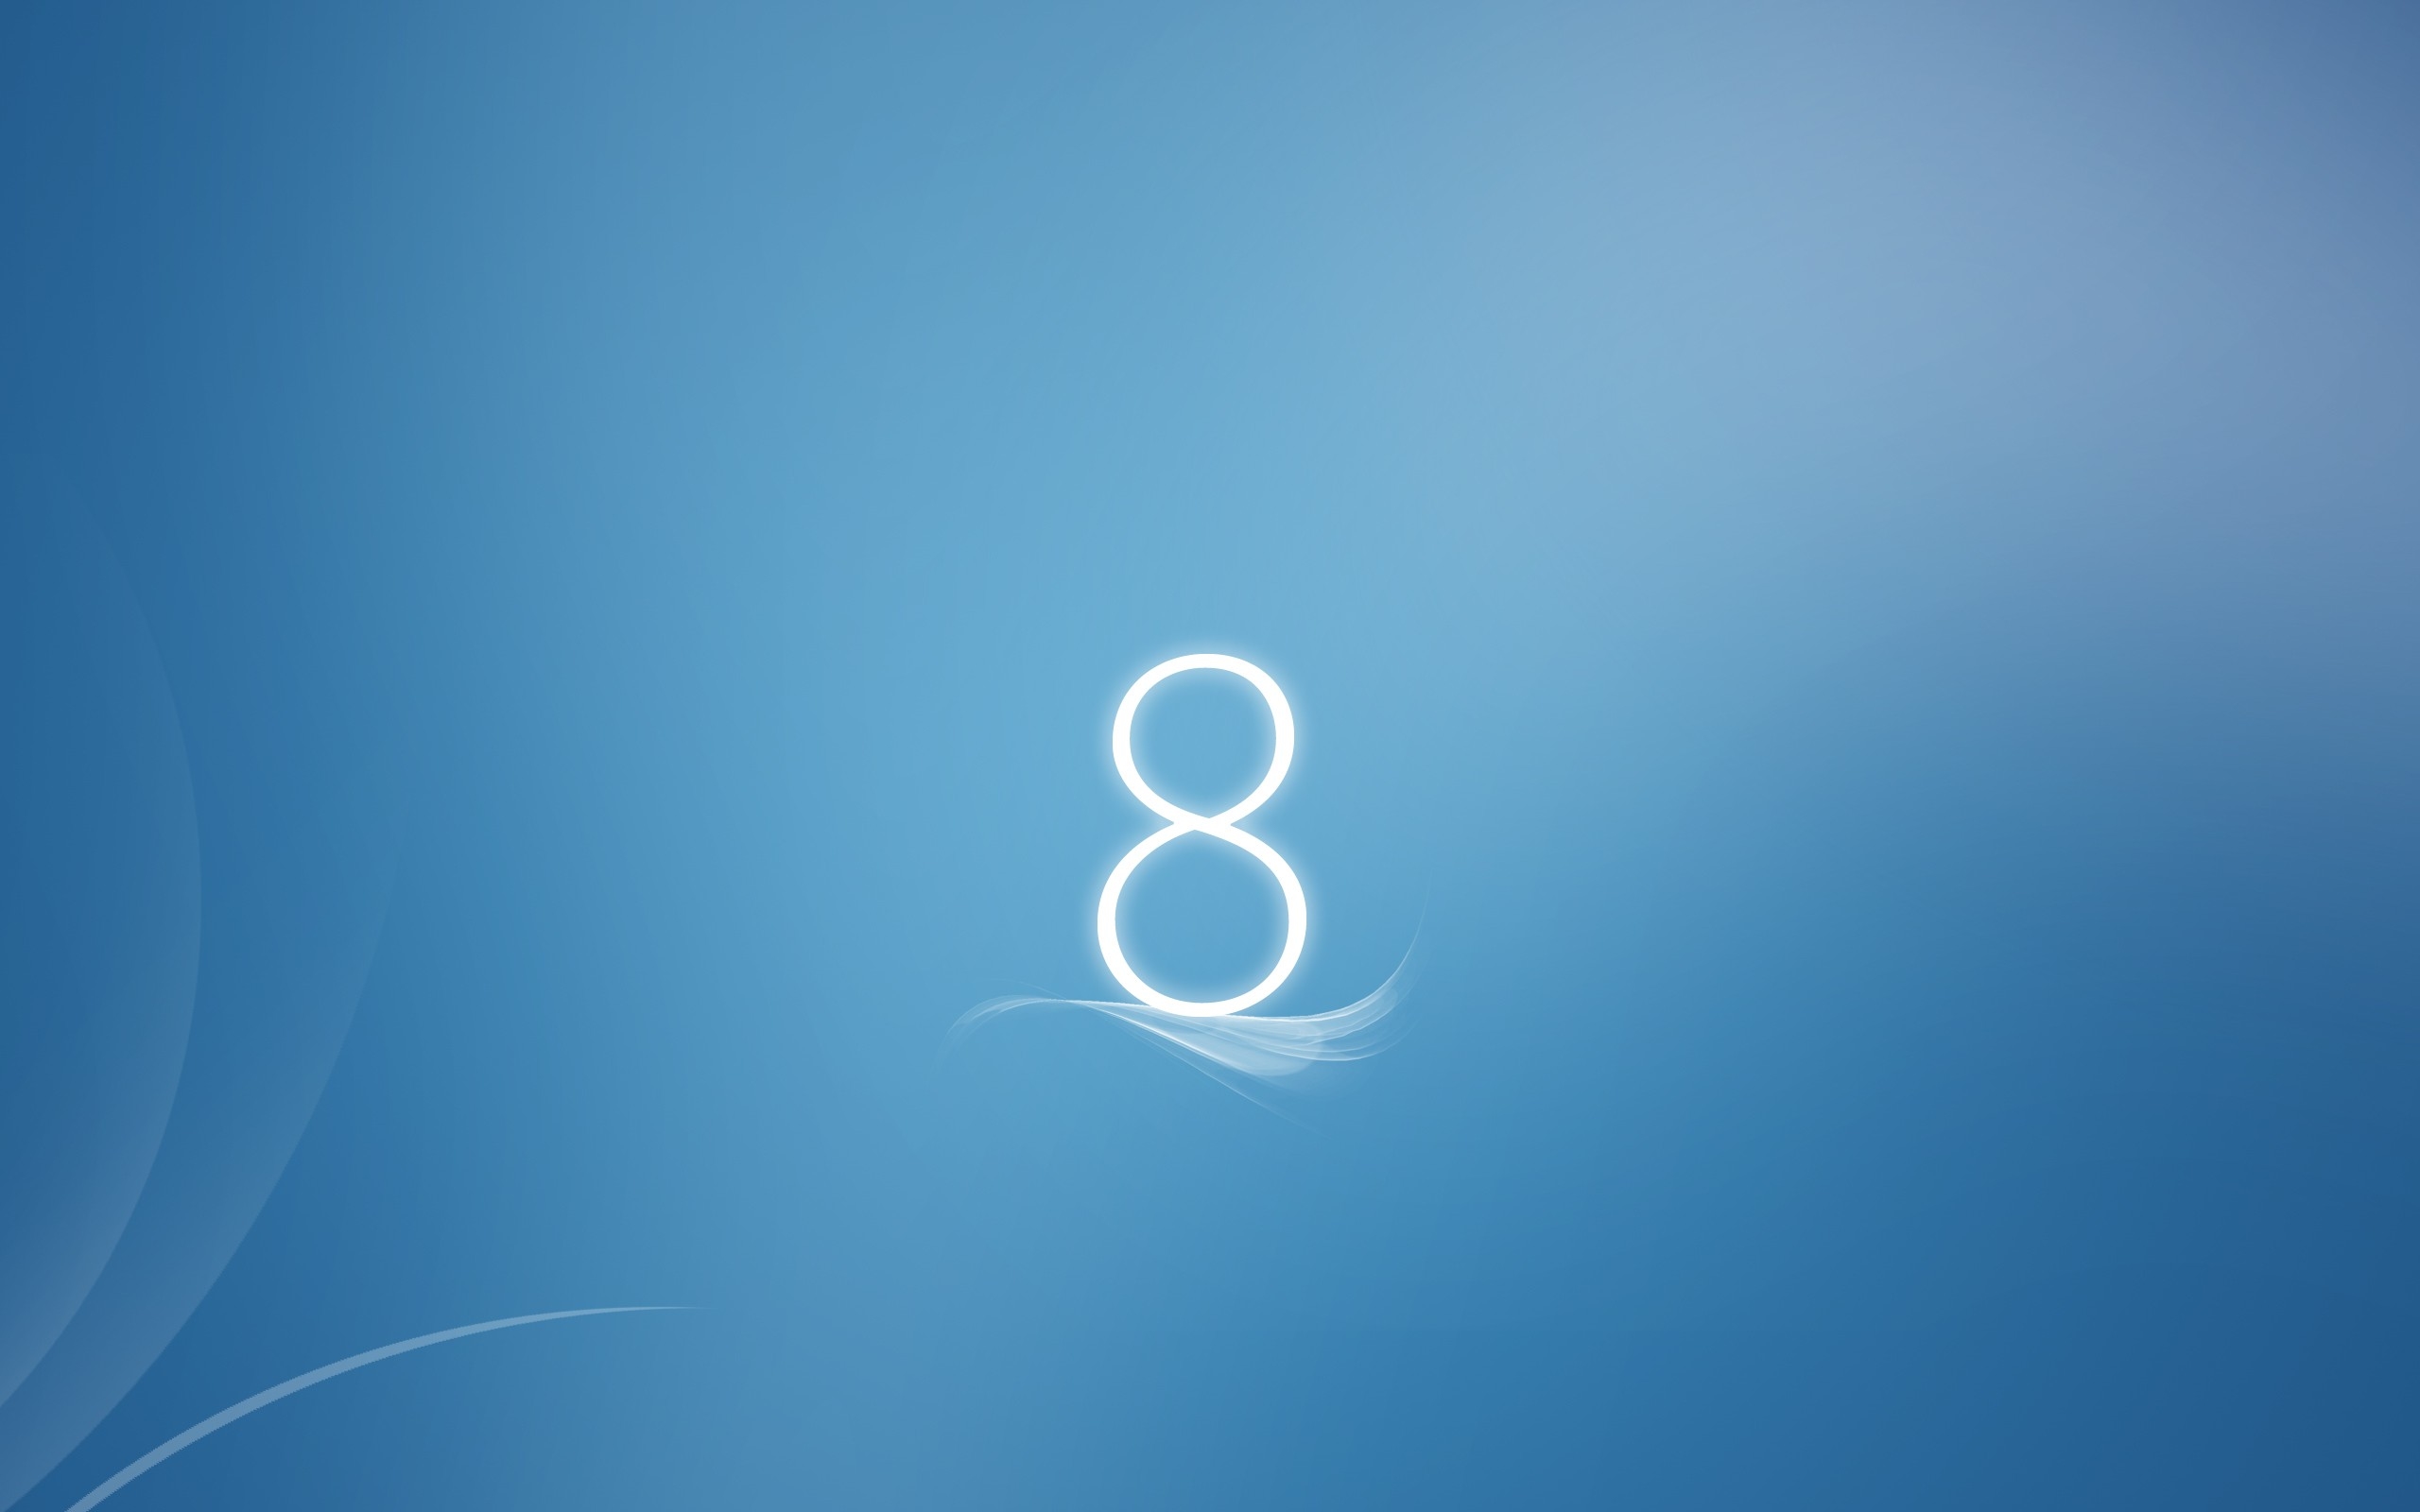 windows 8 smooth blue - Windows 8 Wallpaper (28120137) - Fanpop